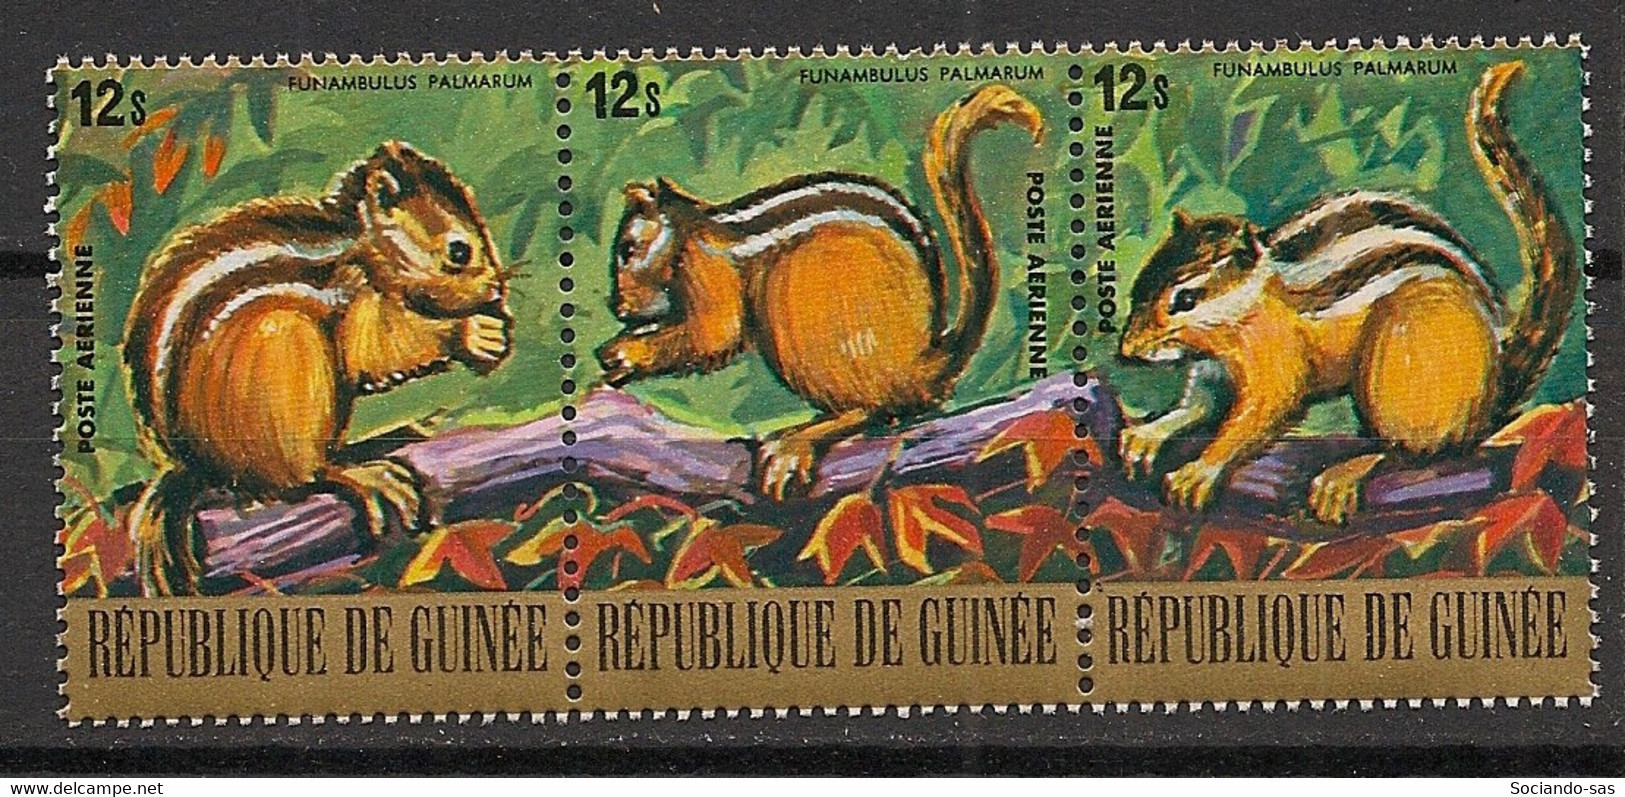 GUINEE - 1977 - Poste Aérienne PA N°YT. 128 à 130 - Ecureuil / Squirrel - Neuf Luxe ** / MNH / Postfrisch - República De Guinea (1958-...)